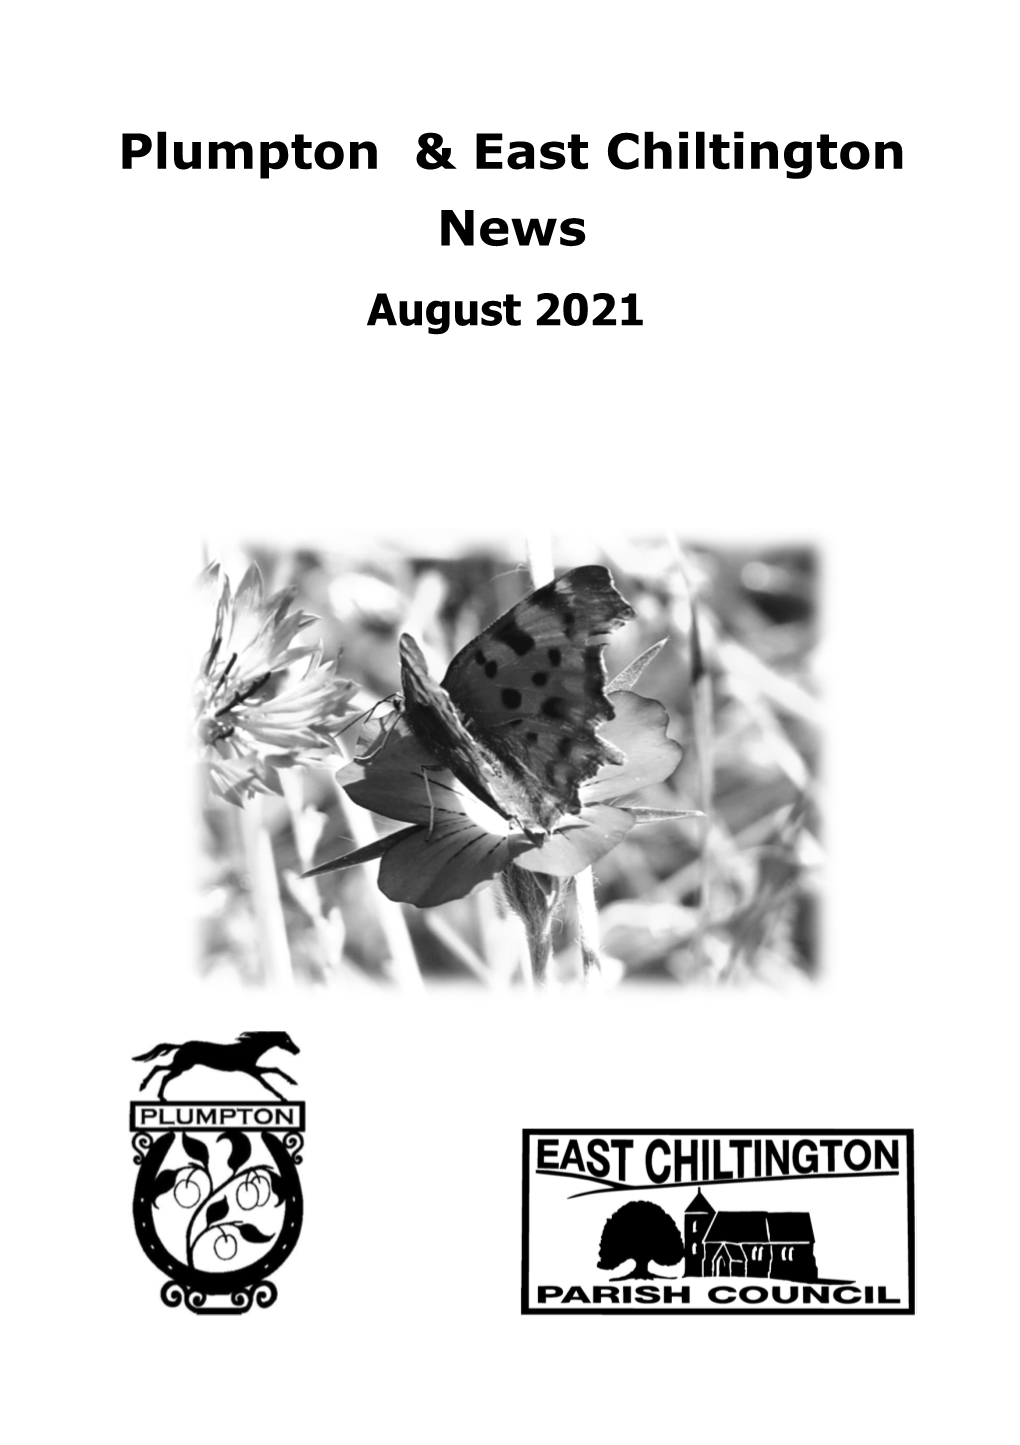 Plumpton & East Chiltington News – August